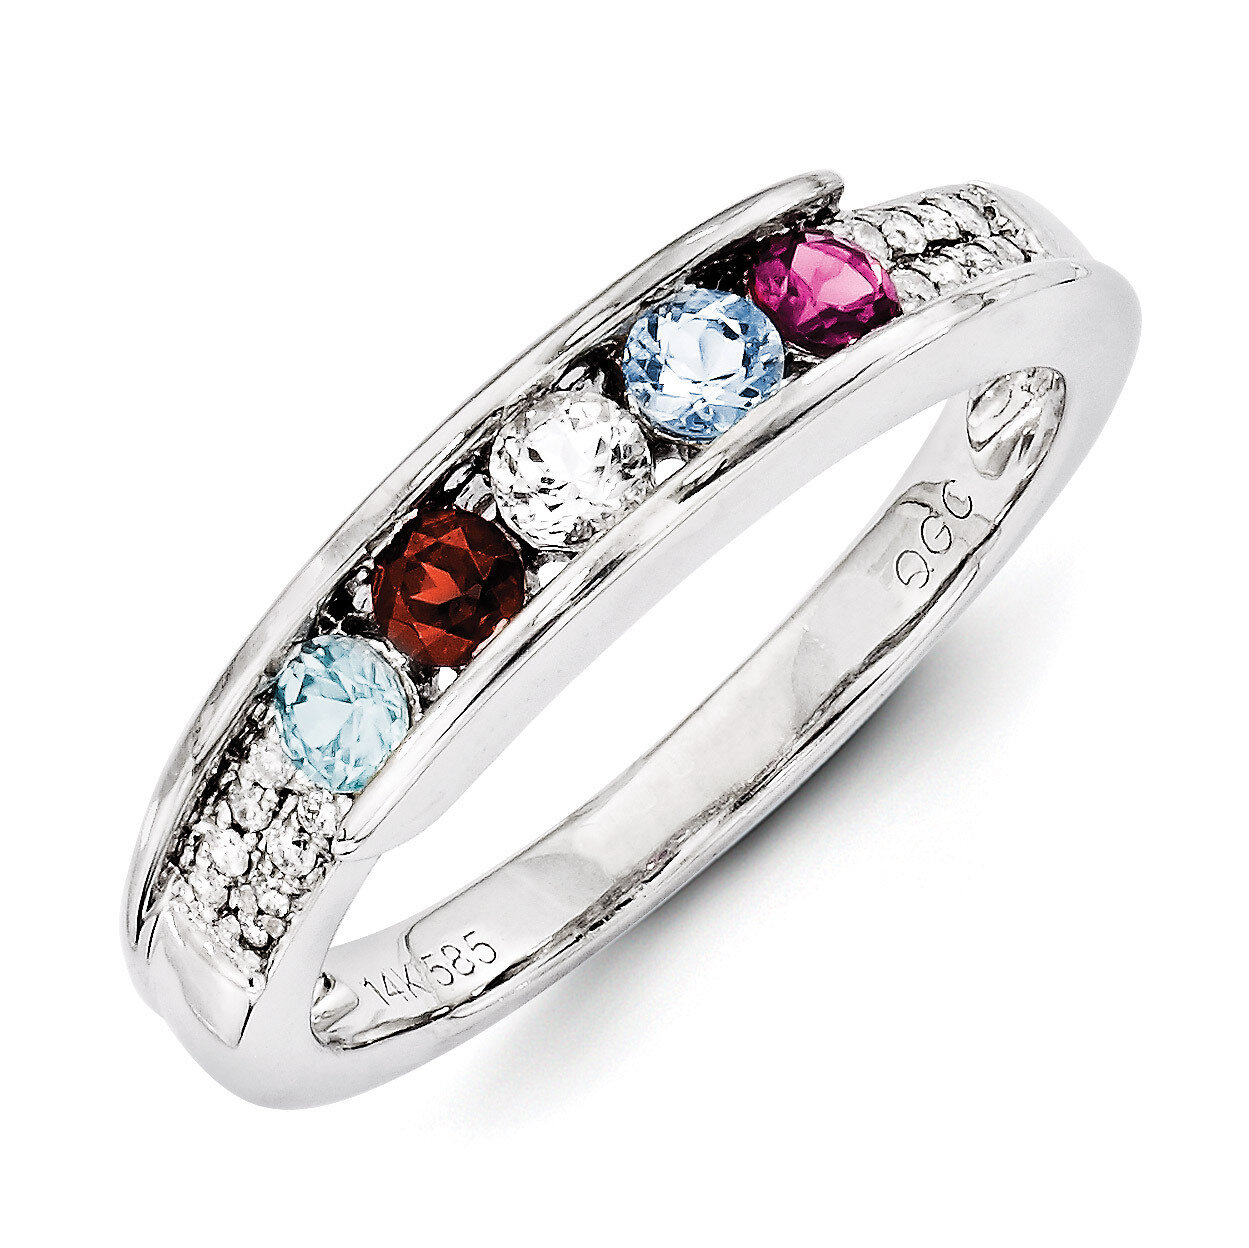 5 Birthstones Family Jewelry Diamond Semi-Set Ring 14k White Gold XMRW49/5